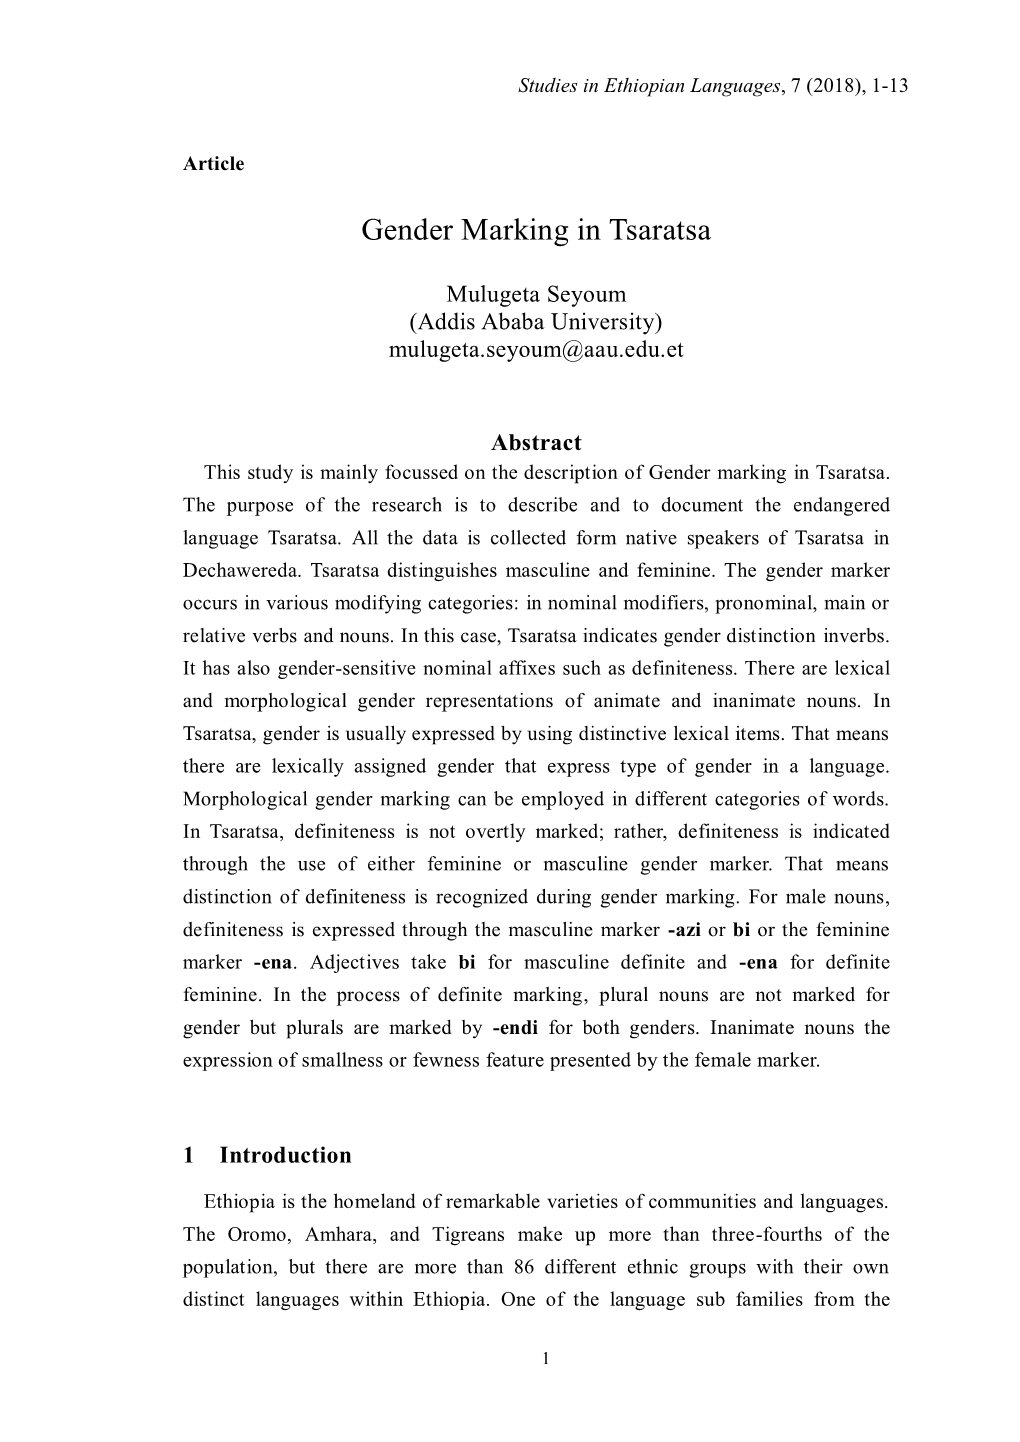 Gender Marking in Tsaratsa